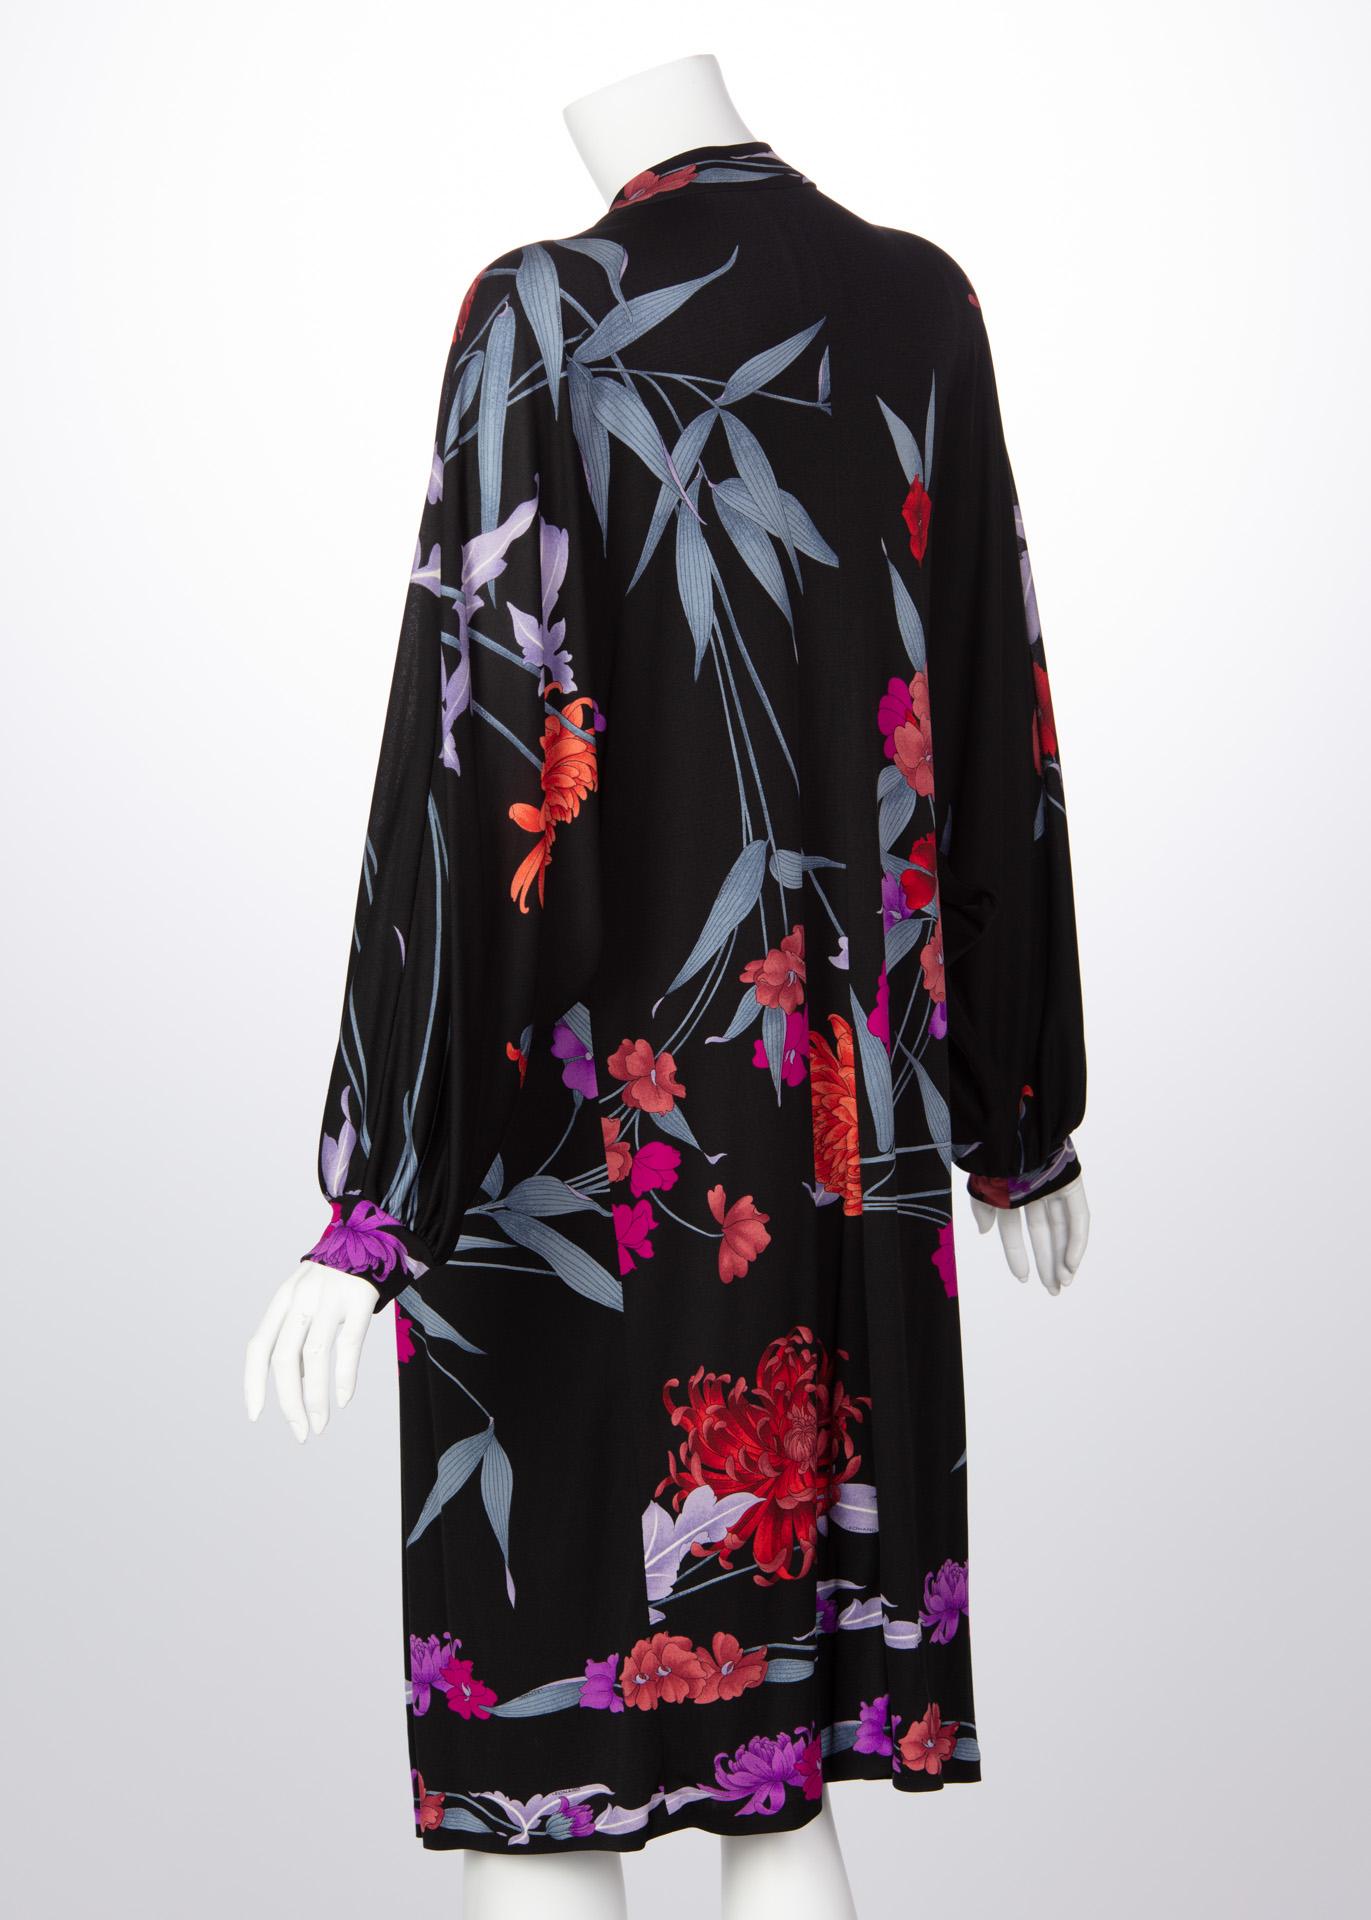 1970s Leonard Paris Floral Silk Jersey Dress Jacket For Sale 3